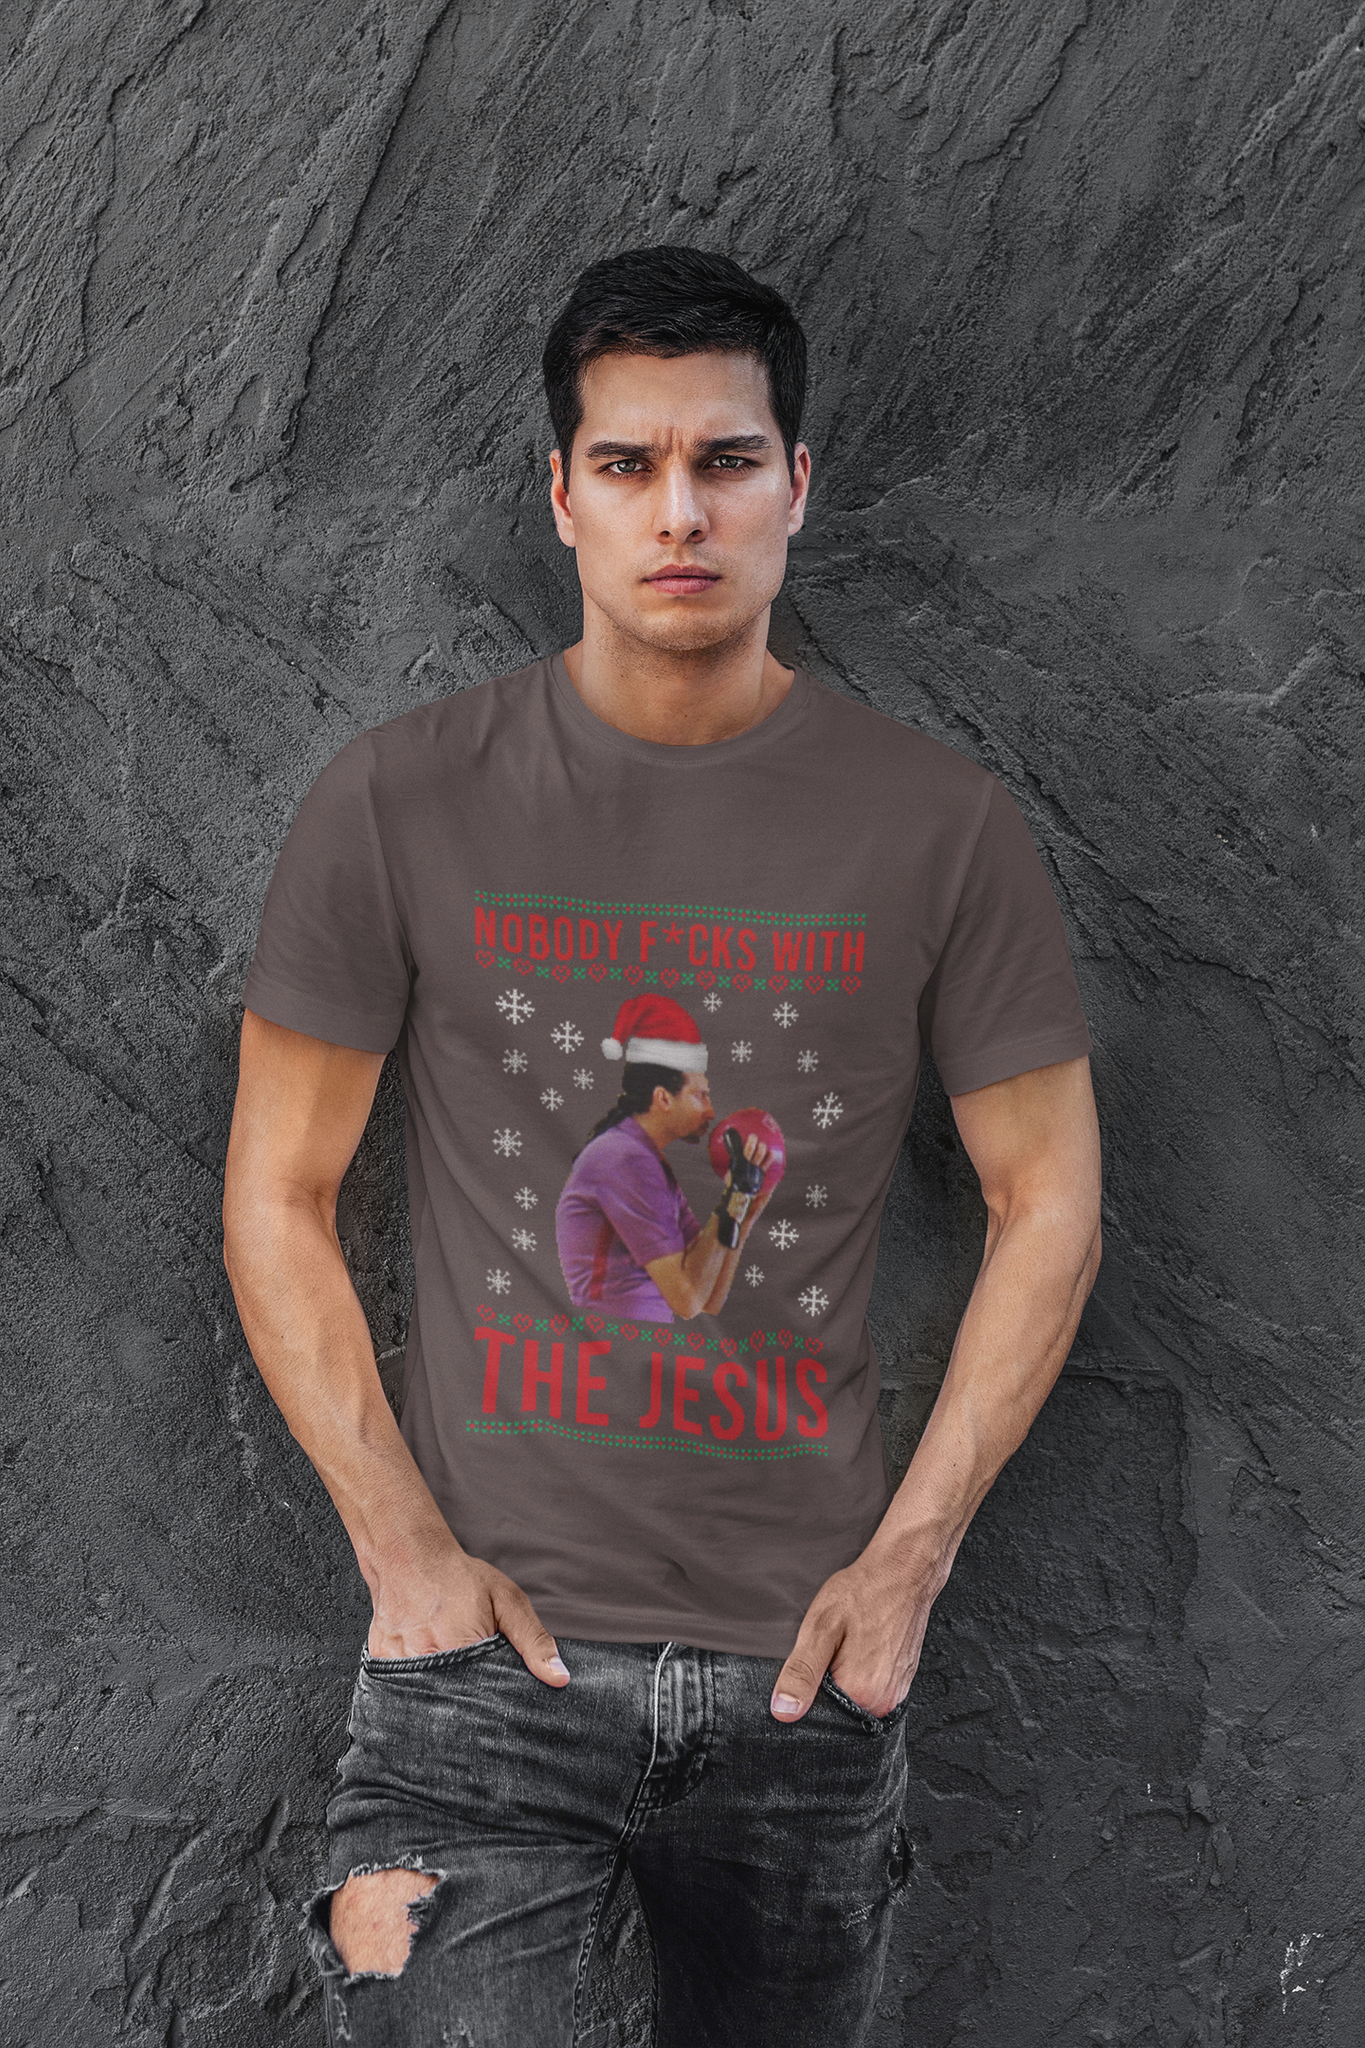 The Big Lebowski T Shirt, Jesus Quintana T shirt, Nobody Fcks With The Jesus Tshirt